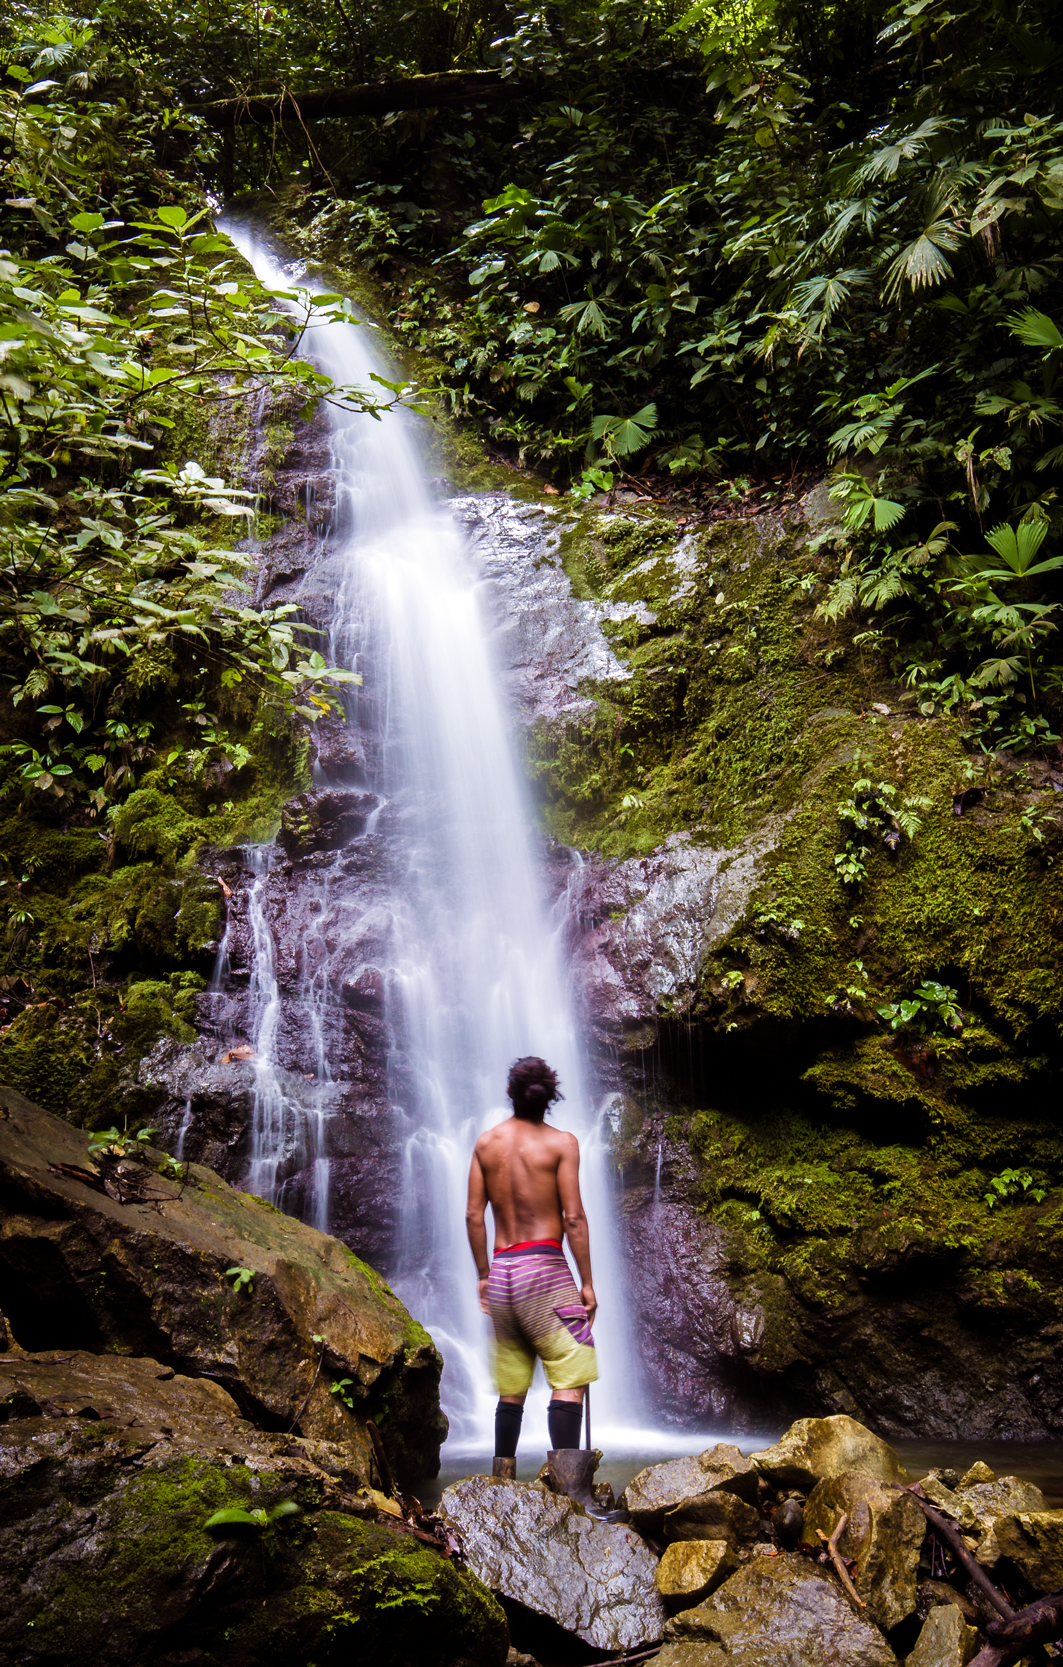 Joaquin at the Waterfall